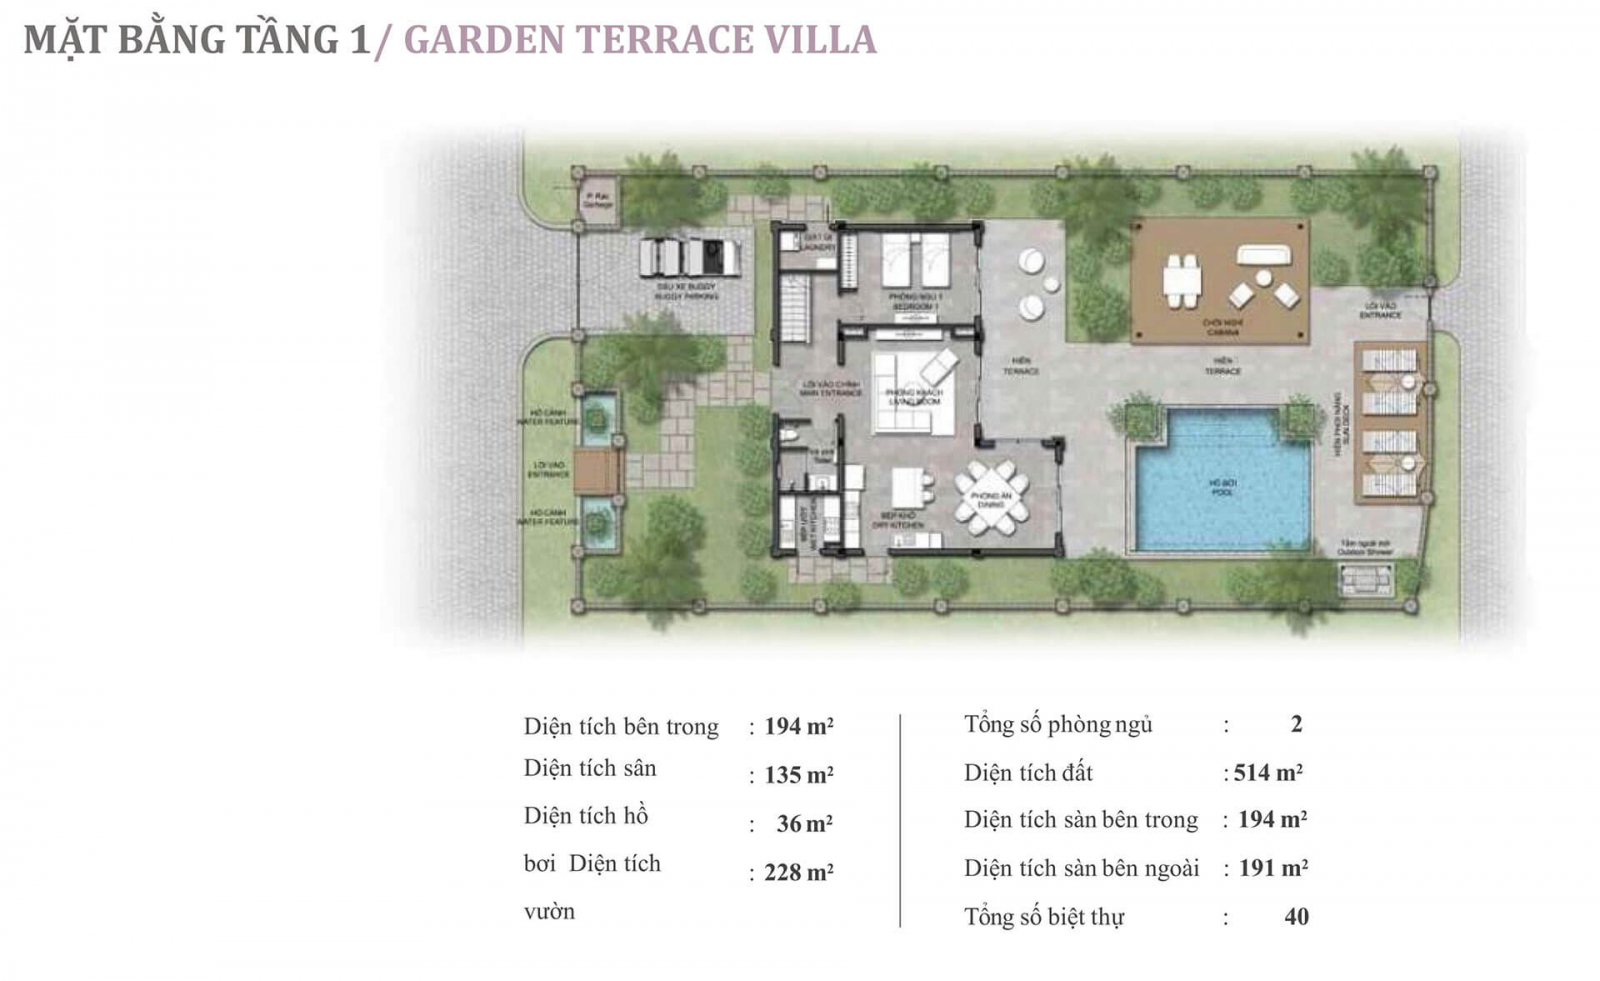 Garden Terrace Villa Fusion Resort & Villas Đà Nẵng